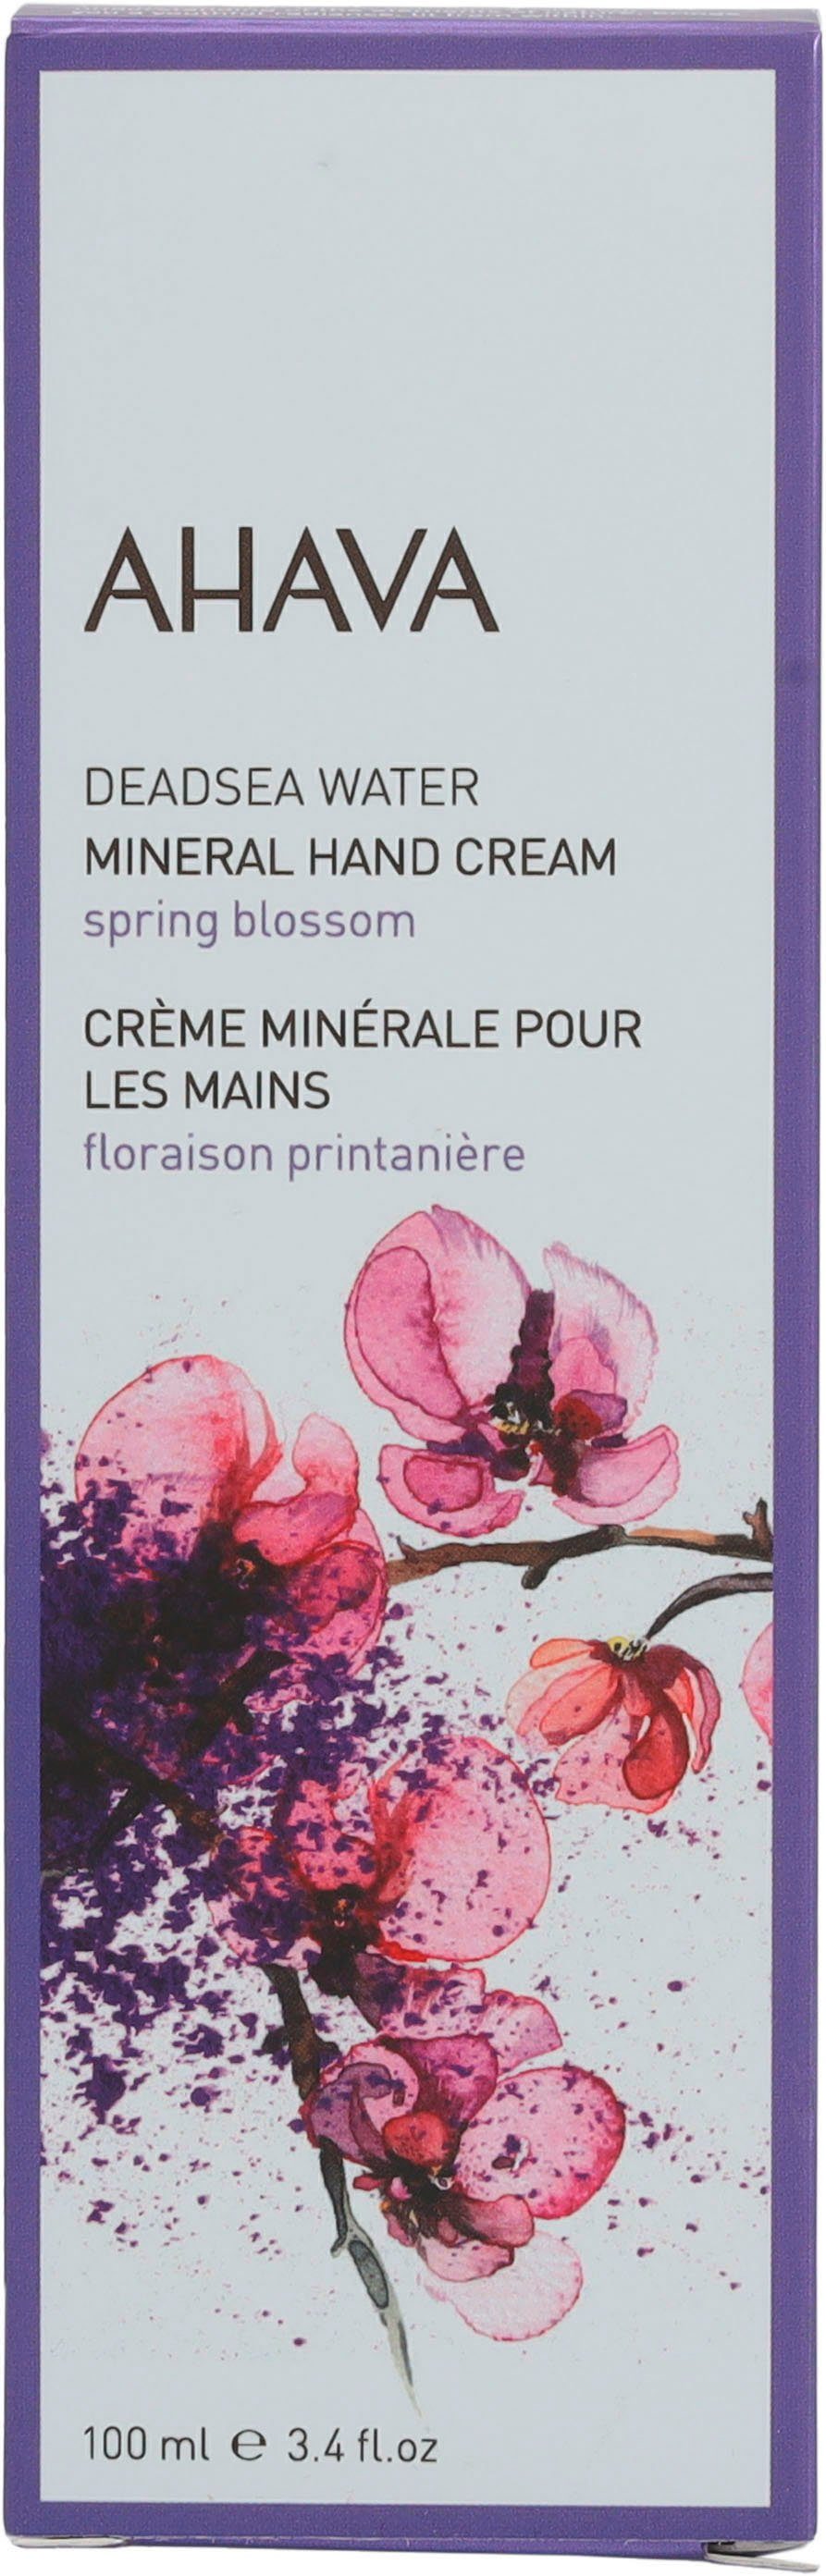 Cream Blossom AHAVA Deadsea Hand Handcreme Spring Water Mineral